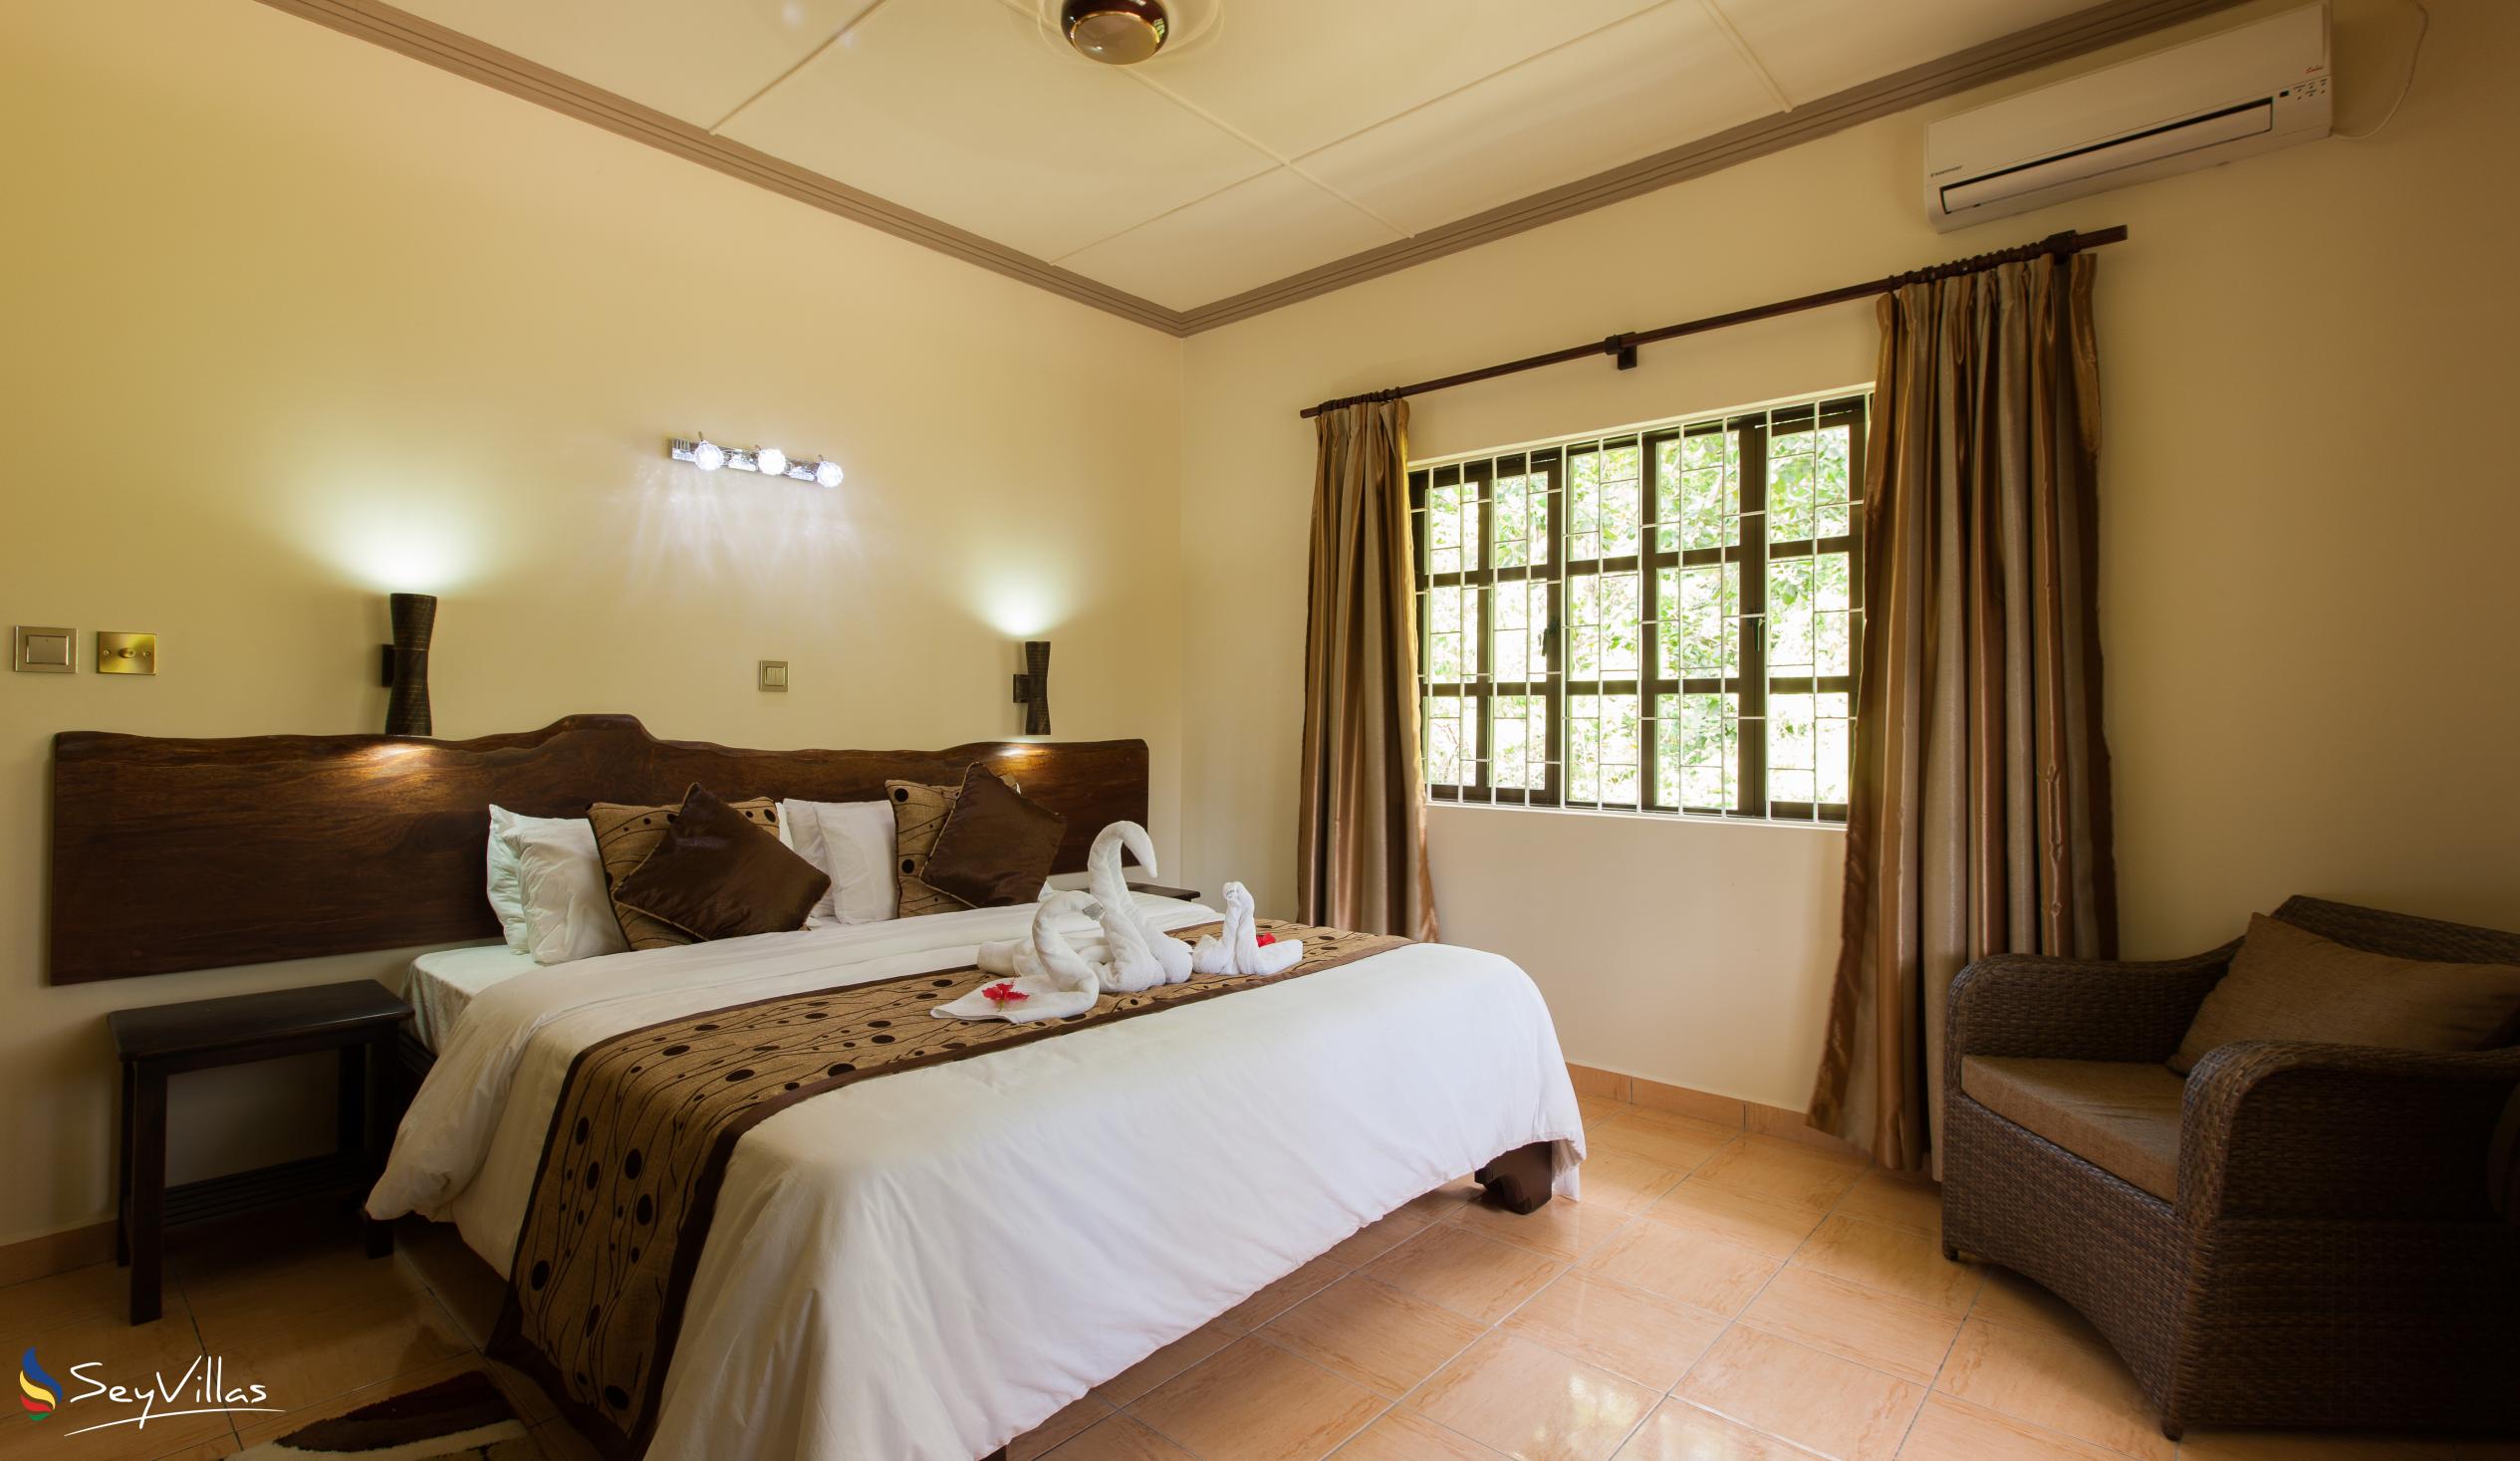 Foto 47: Chez Bea Villa - Appartement 2 chambres - Praslin (Seychelles)